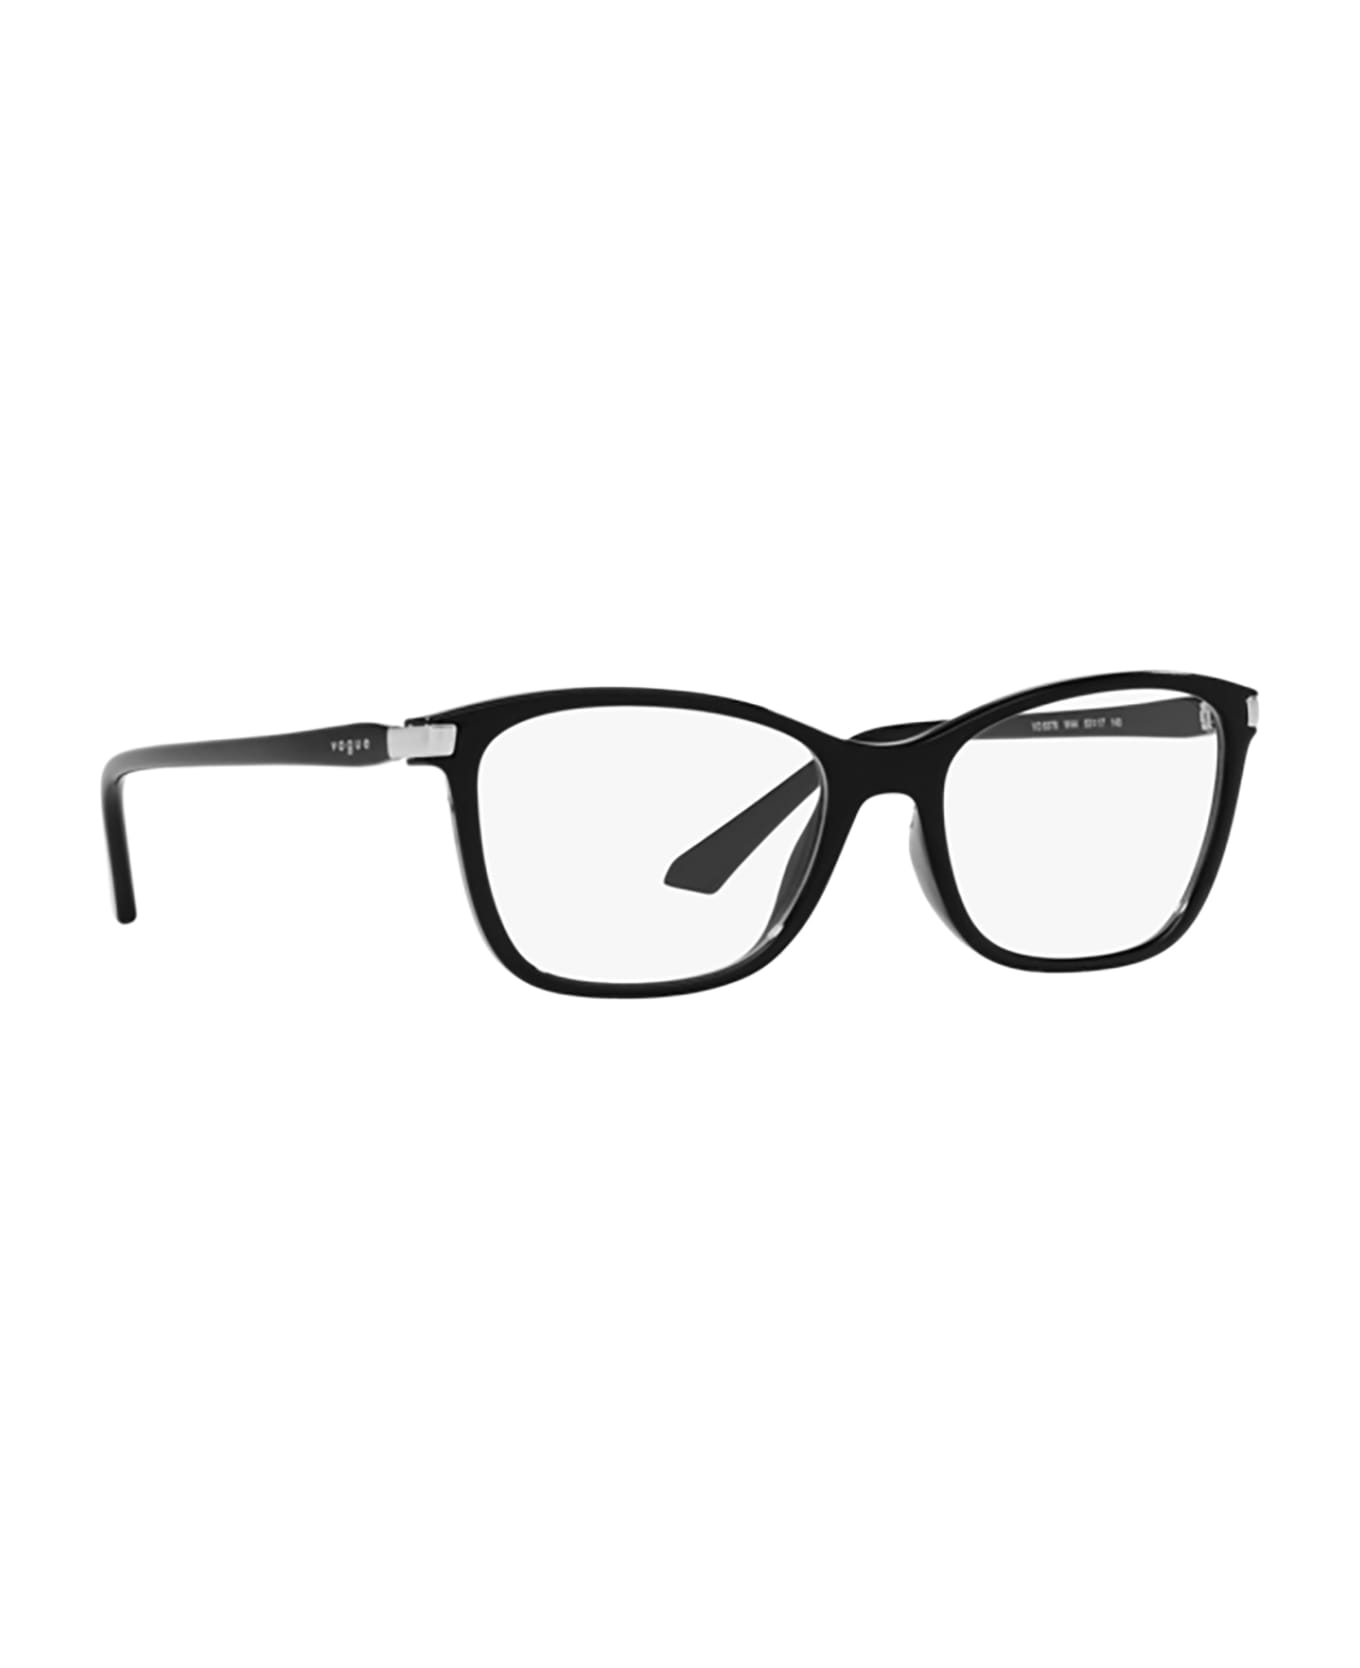 Vogue Eyewear Vo5378 Black Glasses - Black